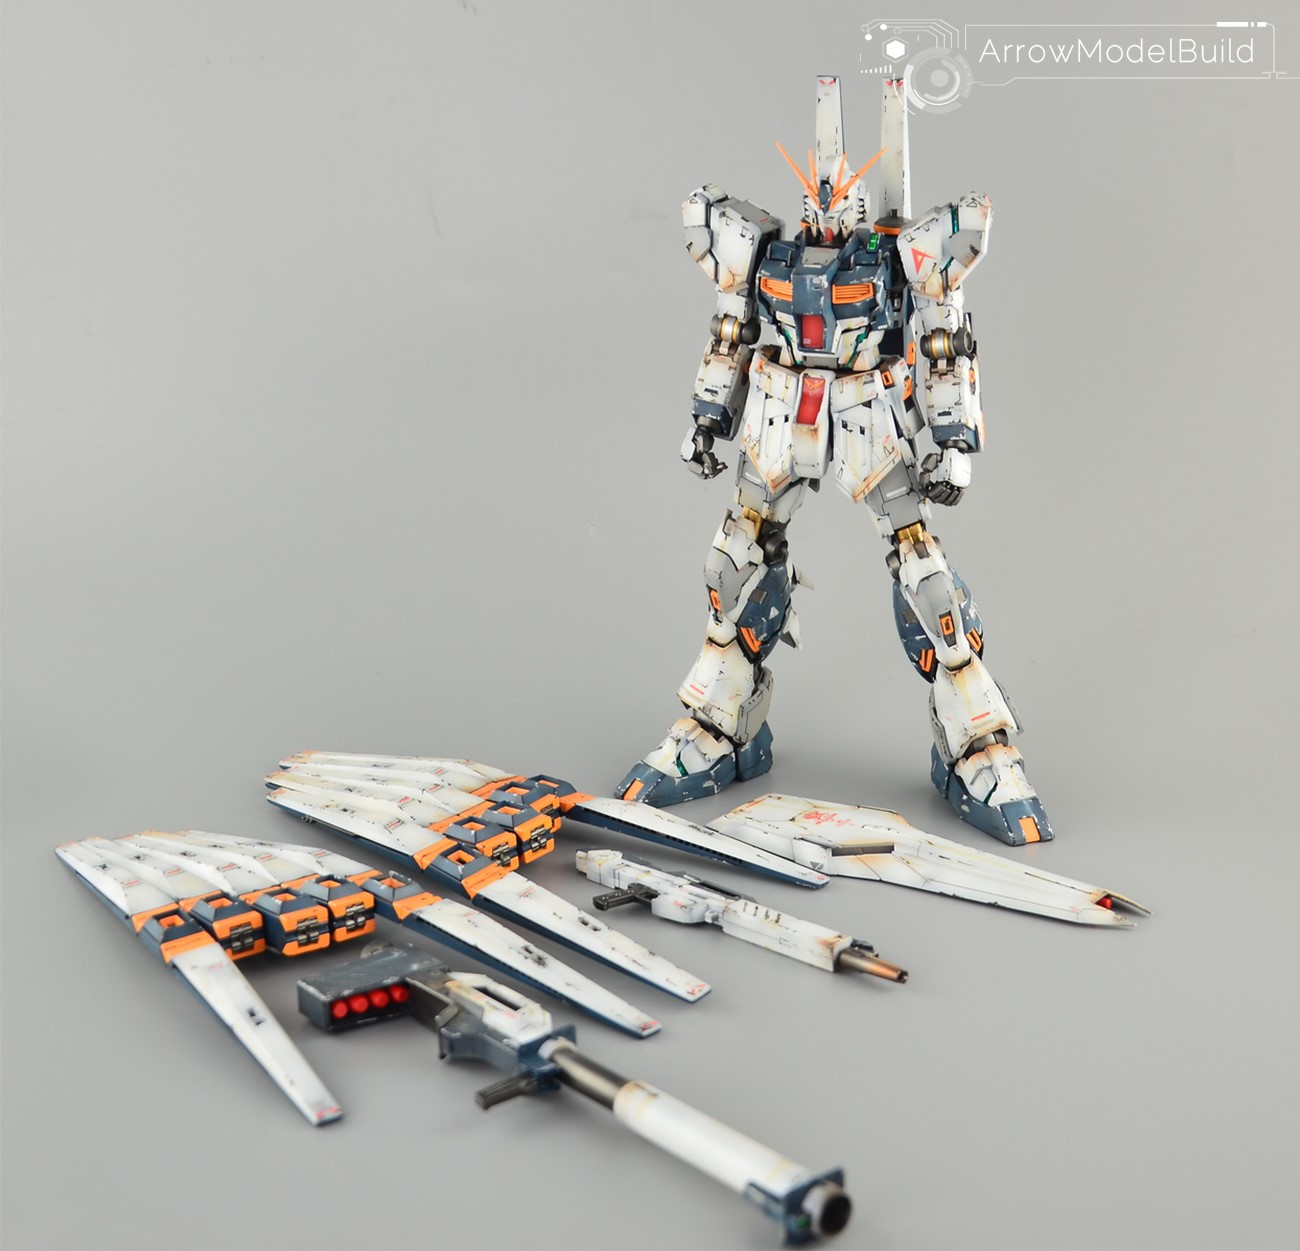 ArrowModelBuild - Figure and Robot, Gundam, Military, Vehicle, Arrow, Model  Build. ArrowModelBuild Nu Gundam Built & Painted 1/48 Model Kit